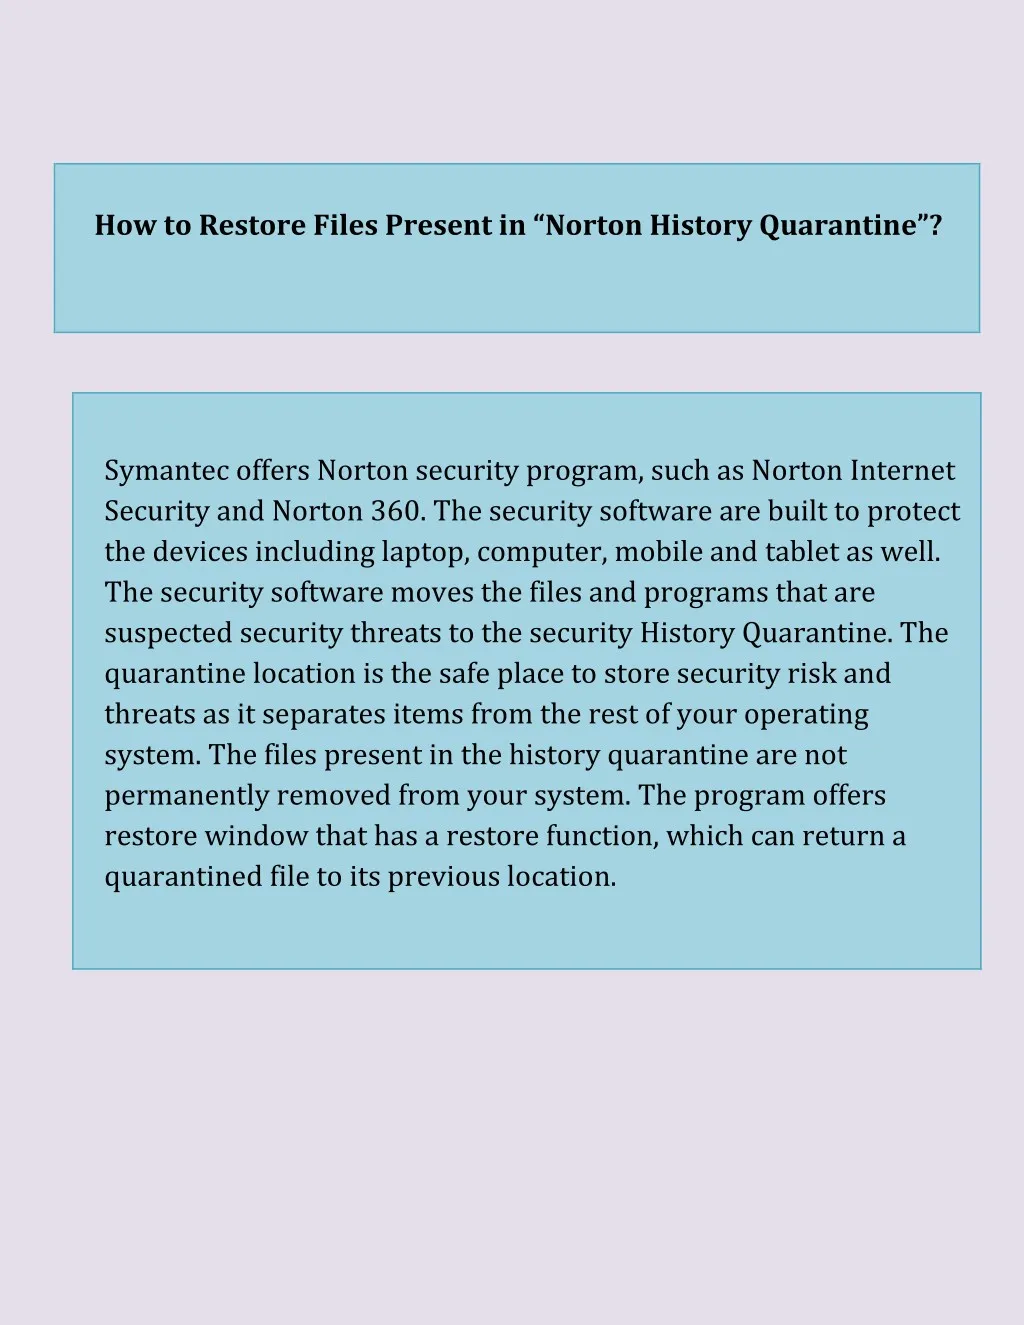 how to restore files present in norton history